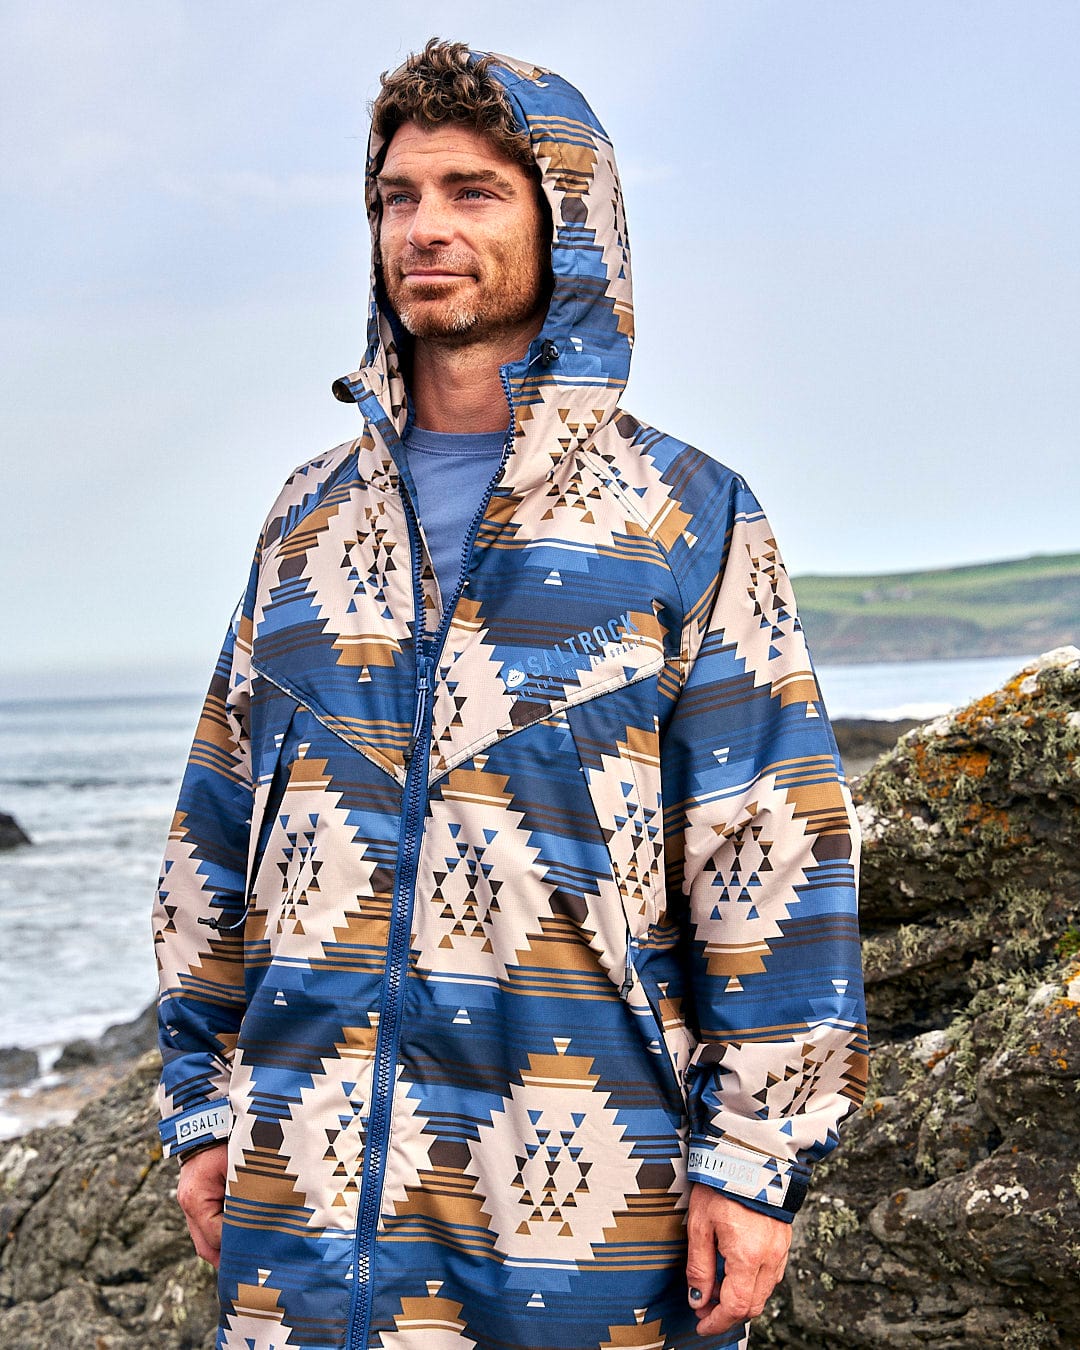 A man wearing a Saltrock Four Seasons Changing Robe - Aztec print raincoat standing on a rocky beach.